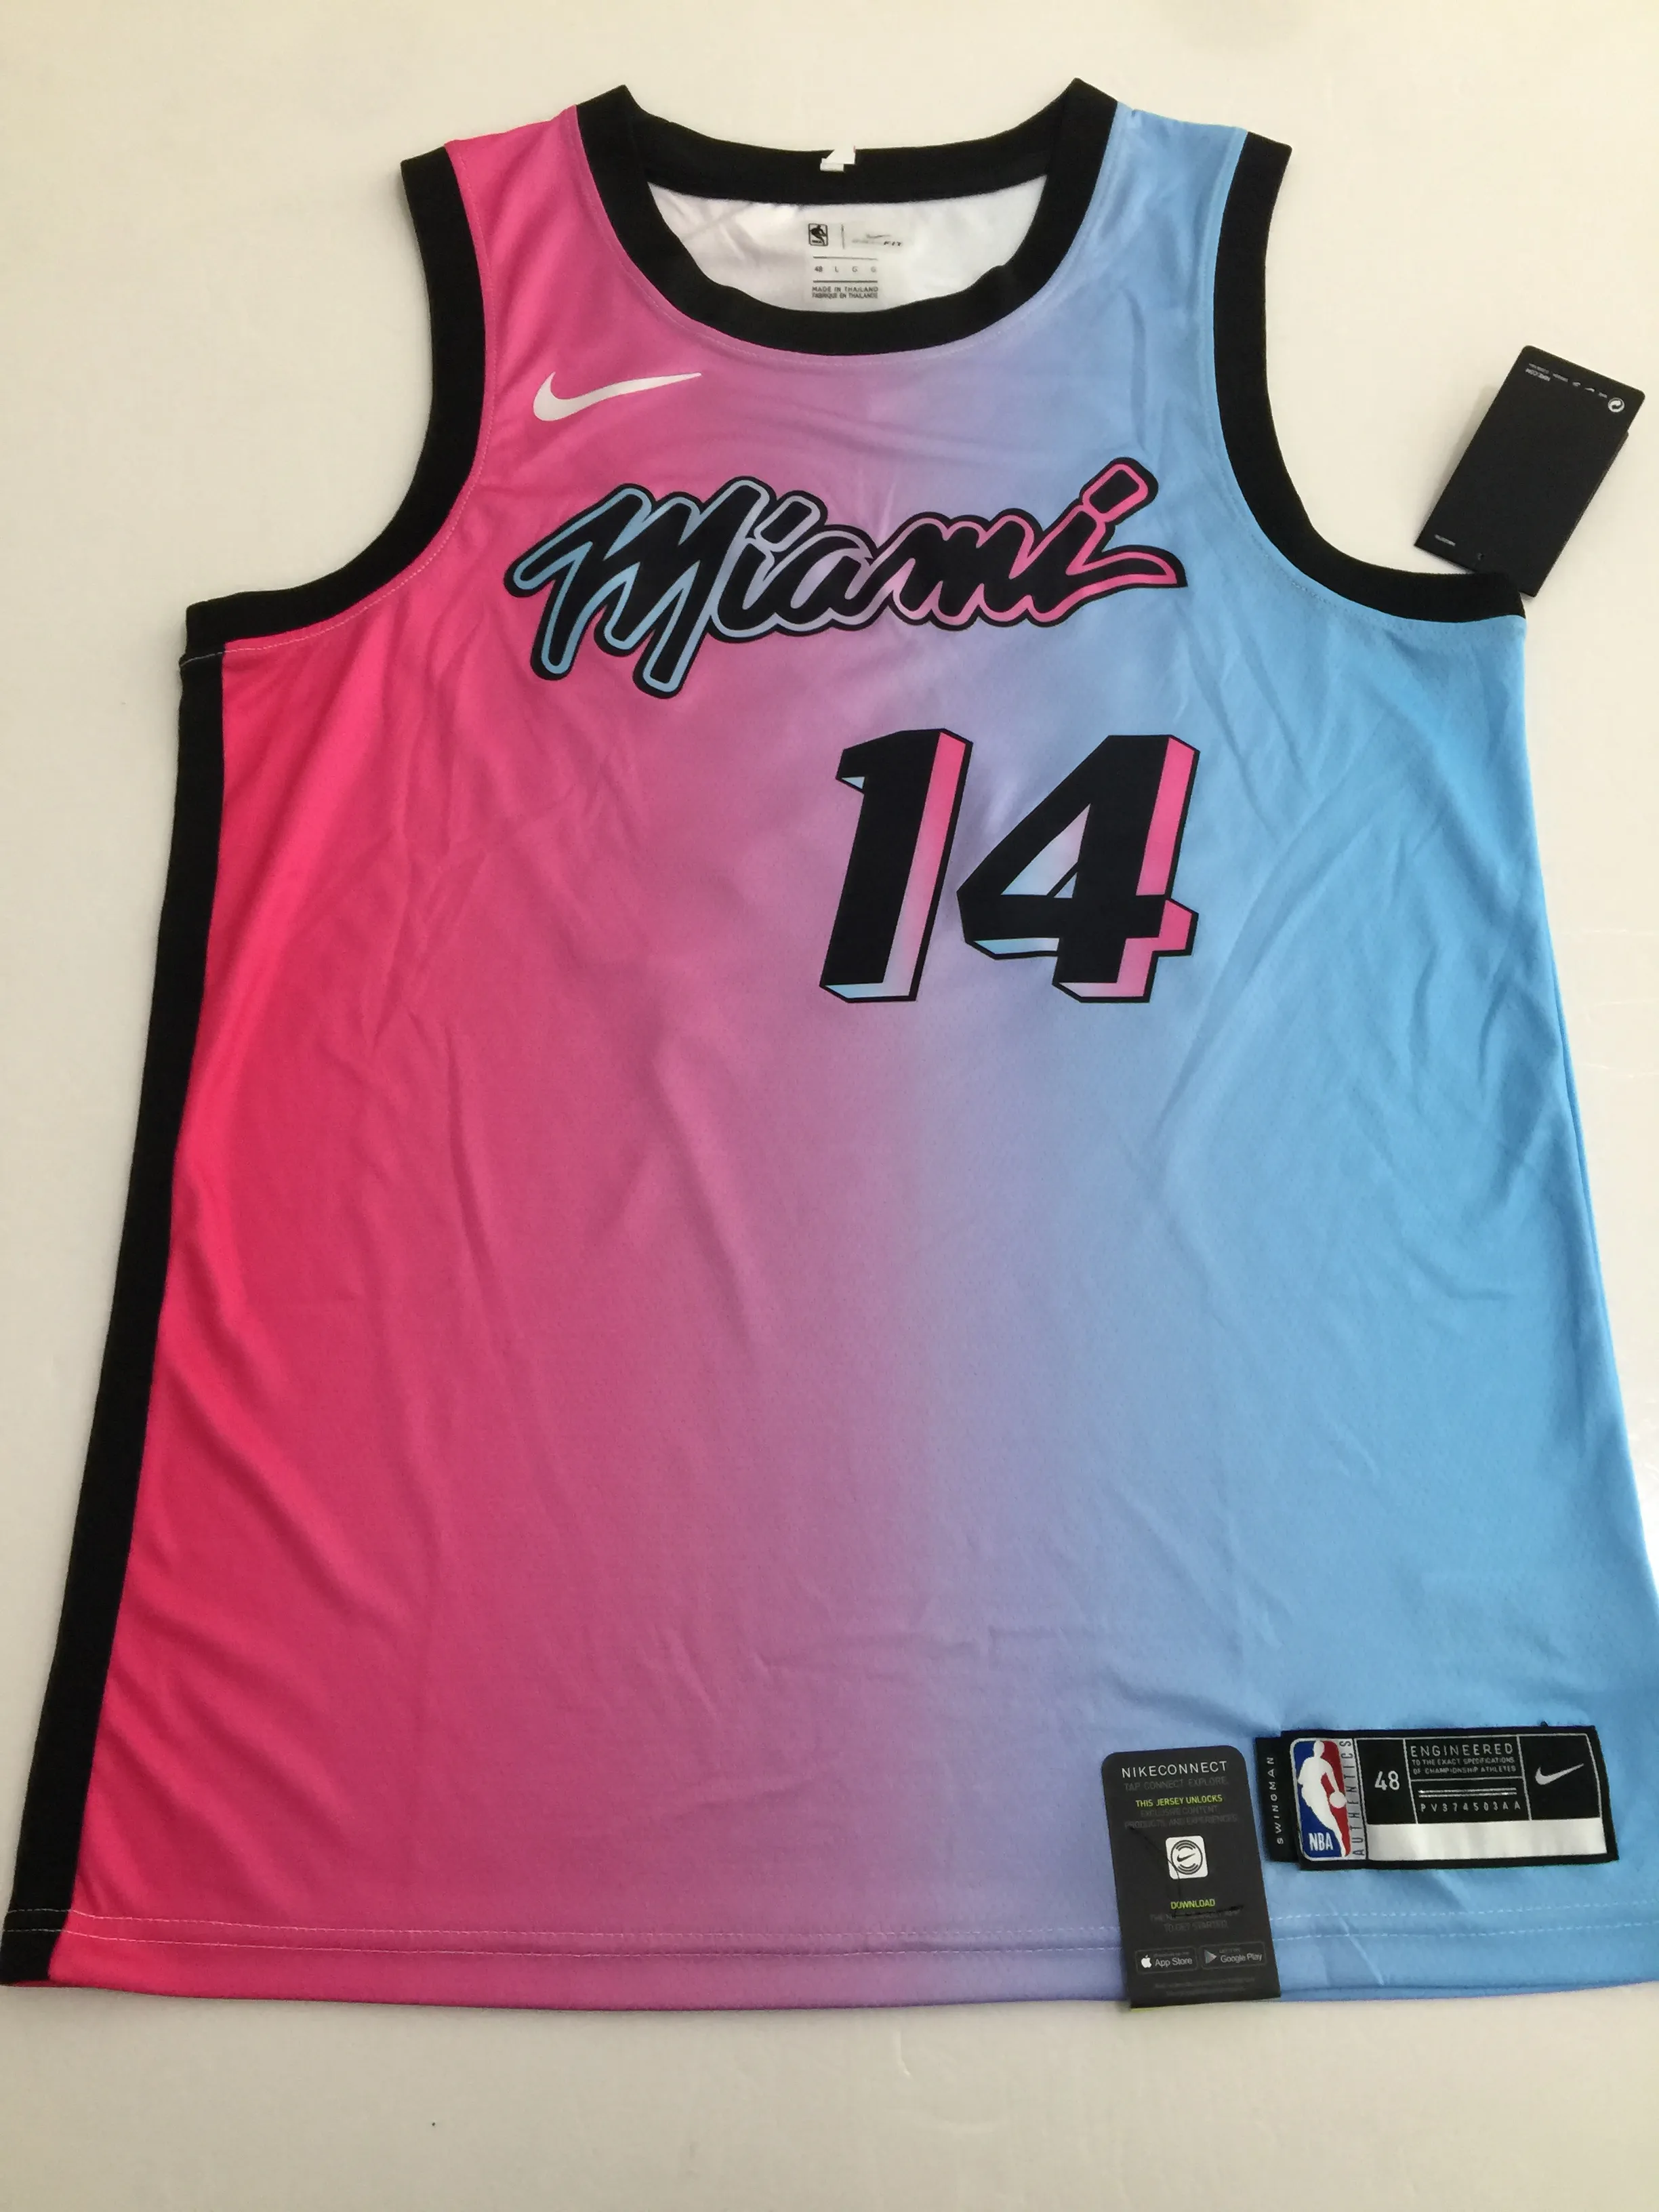 Nike Jersey Men's 50 XL Pink Blue Miami Heat Vice Versa City Bam  Ado #13 NBA